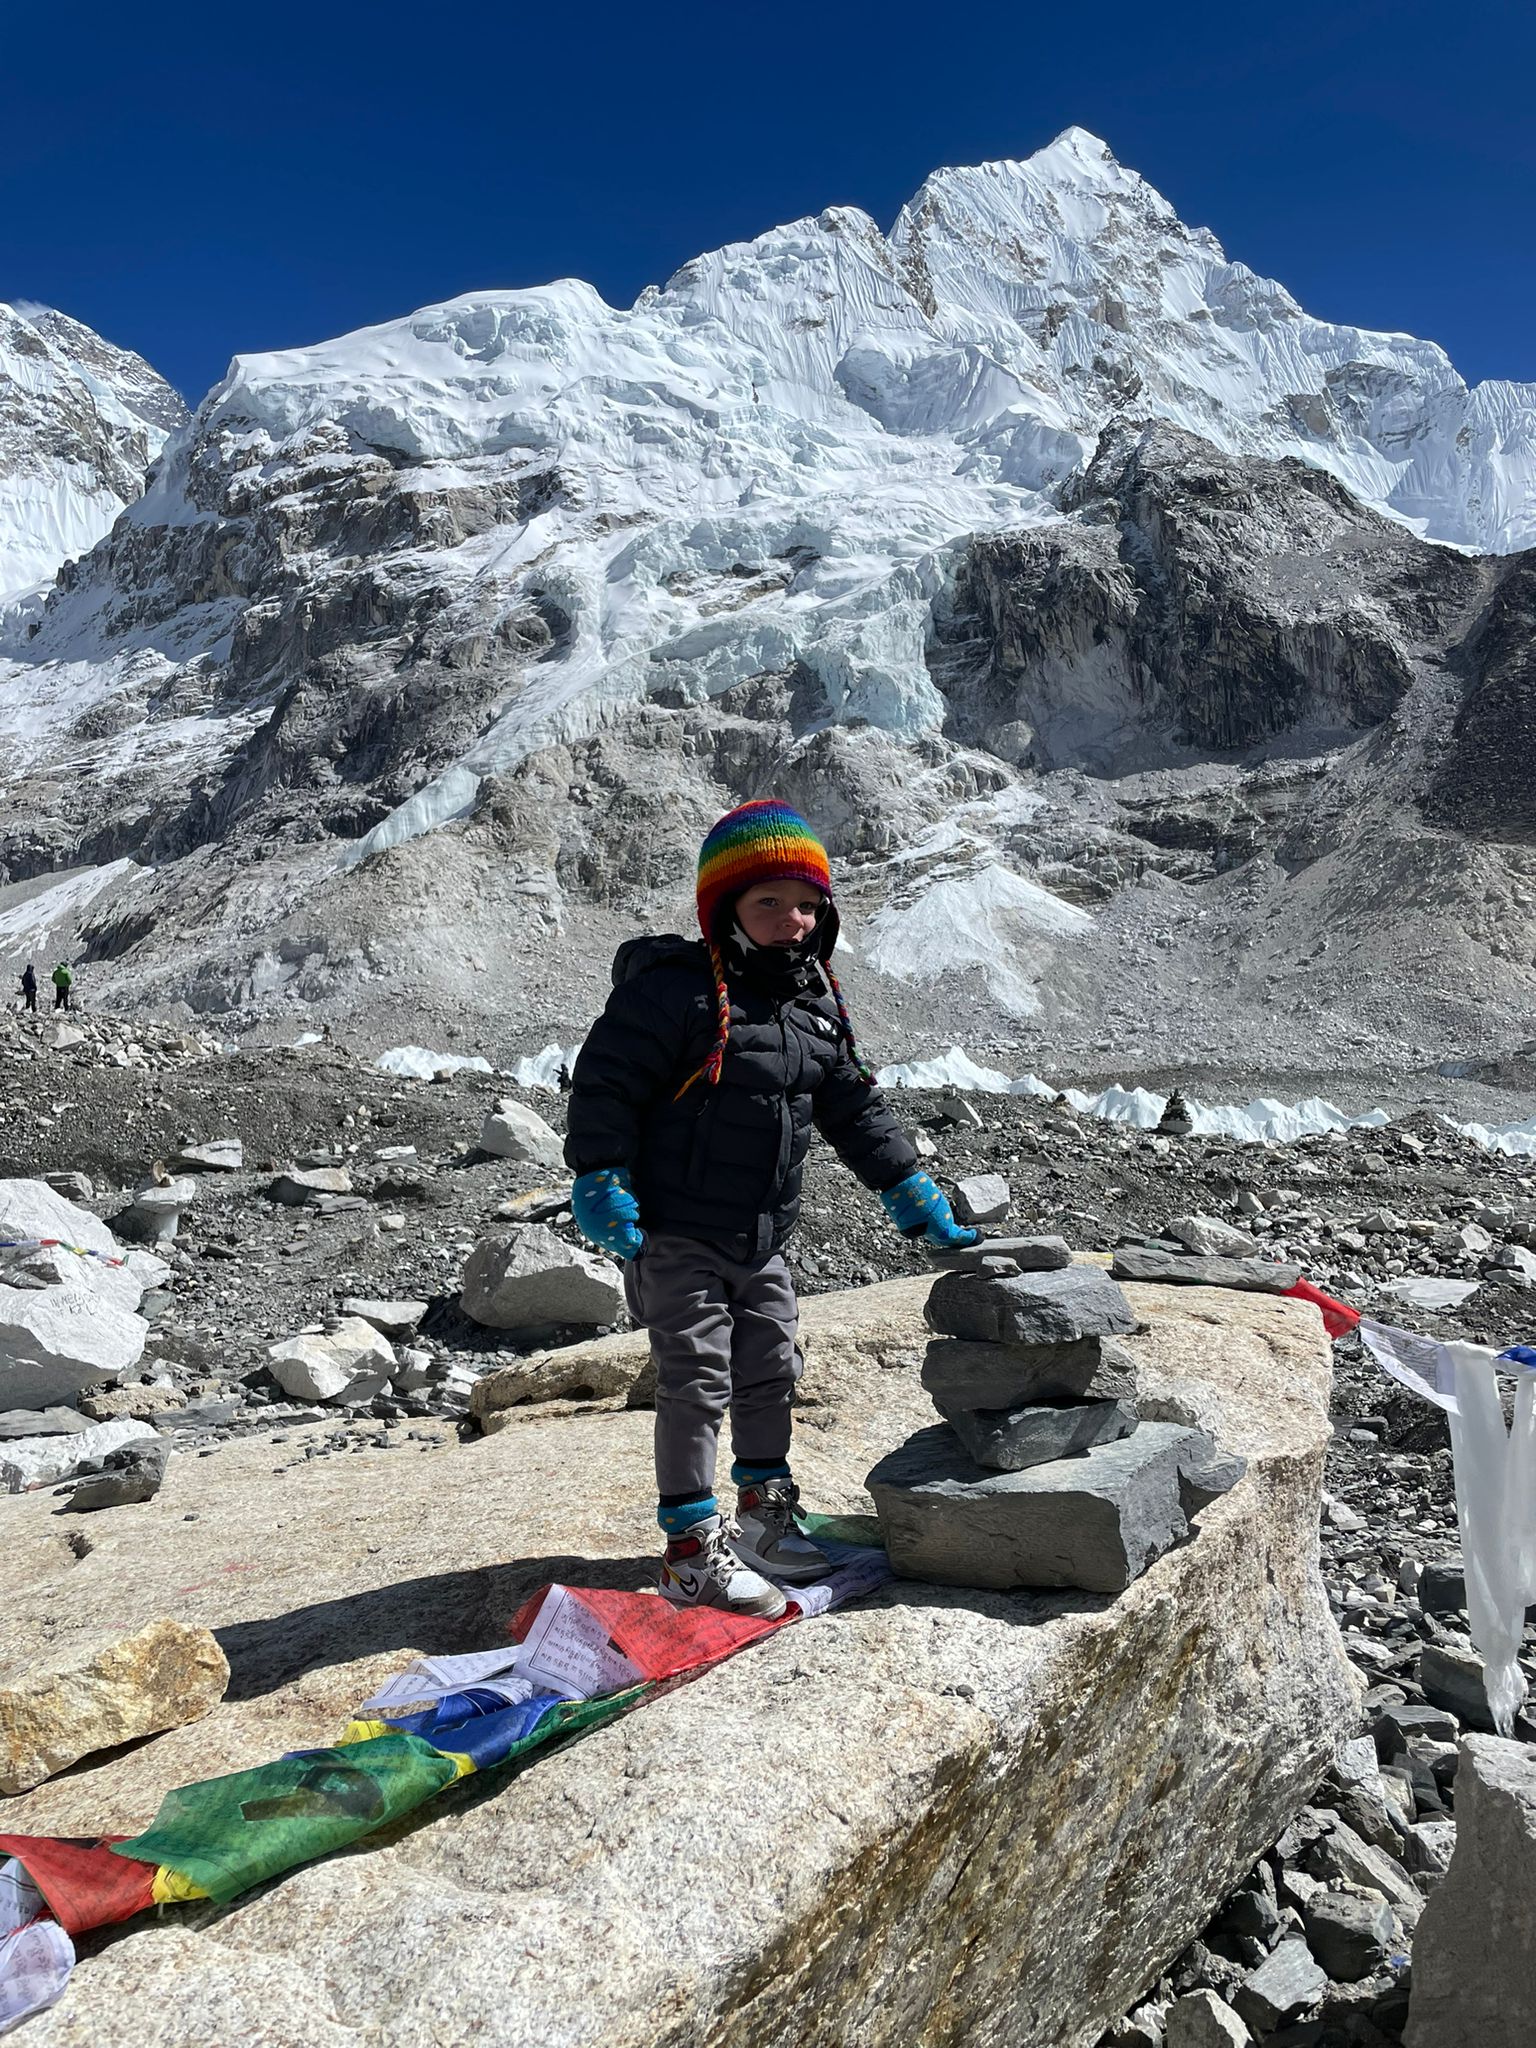 Toddler Carter Dallas at Everest's Base Camp.